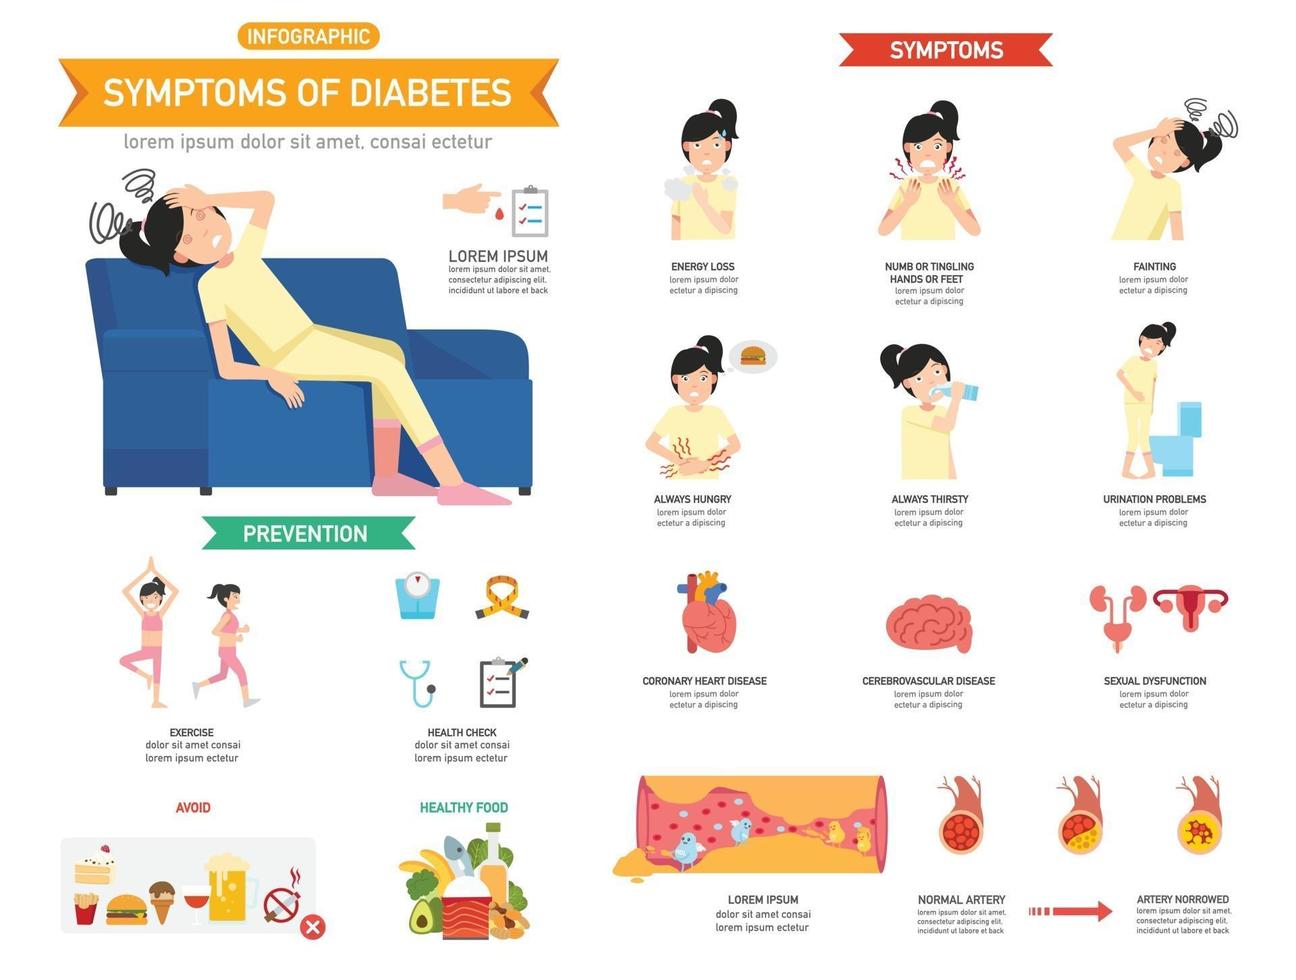 Symptoms of diabetes infographic vector illustration